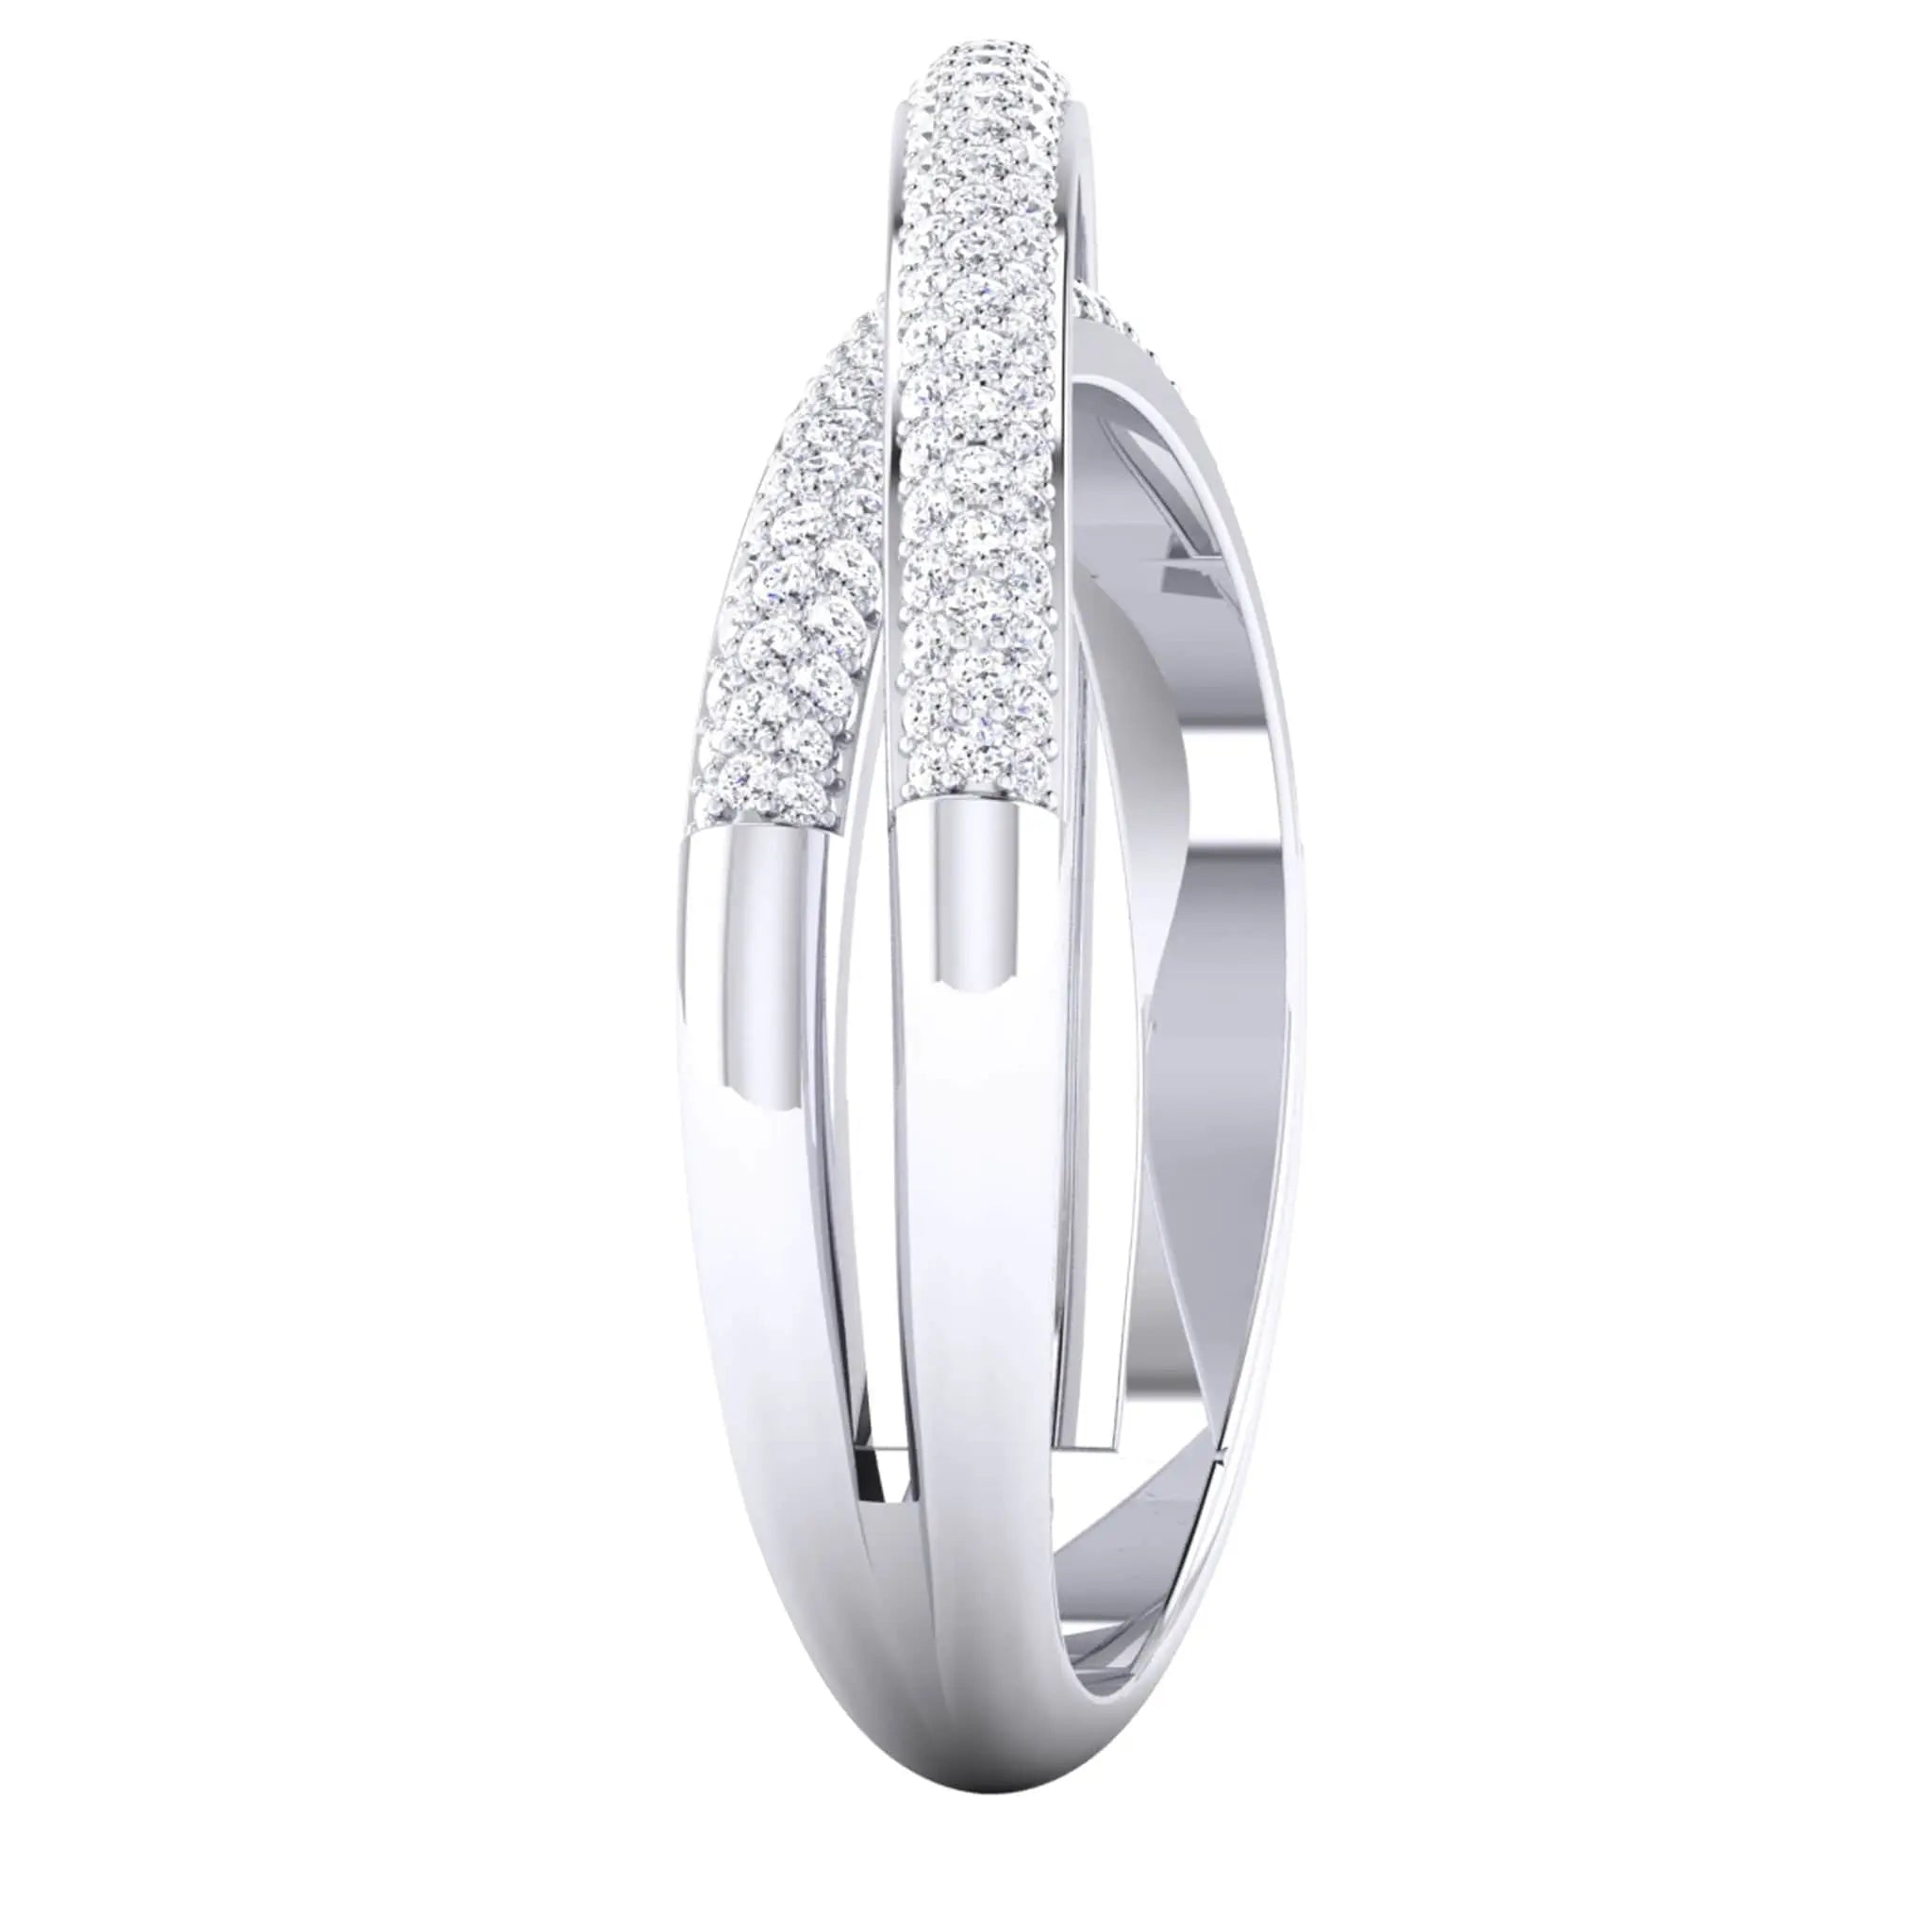 Couple Rings Titanium Steel Men's Ring Three Stone CZ Women's Wedding Ring  Set. women's Size 6 men's Size 10 - Etsy | Womens wedding ring sets,  Wedding ring sets, Rings for men